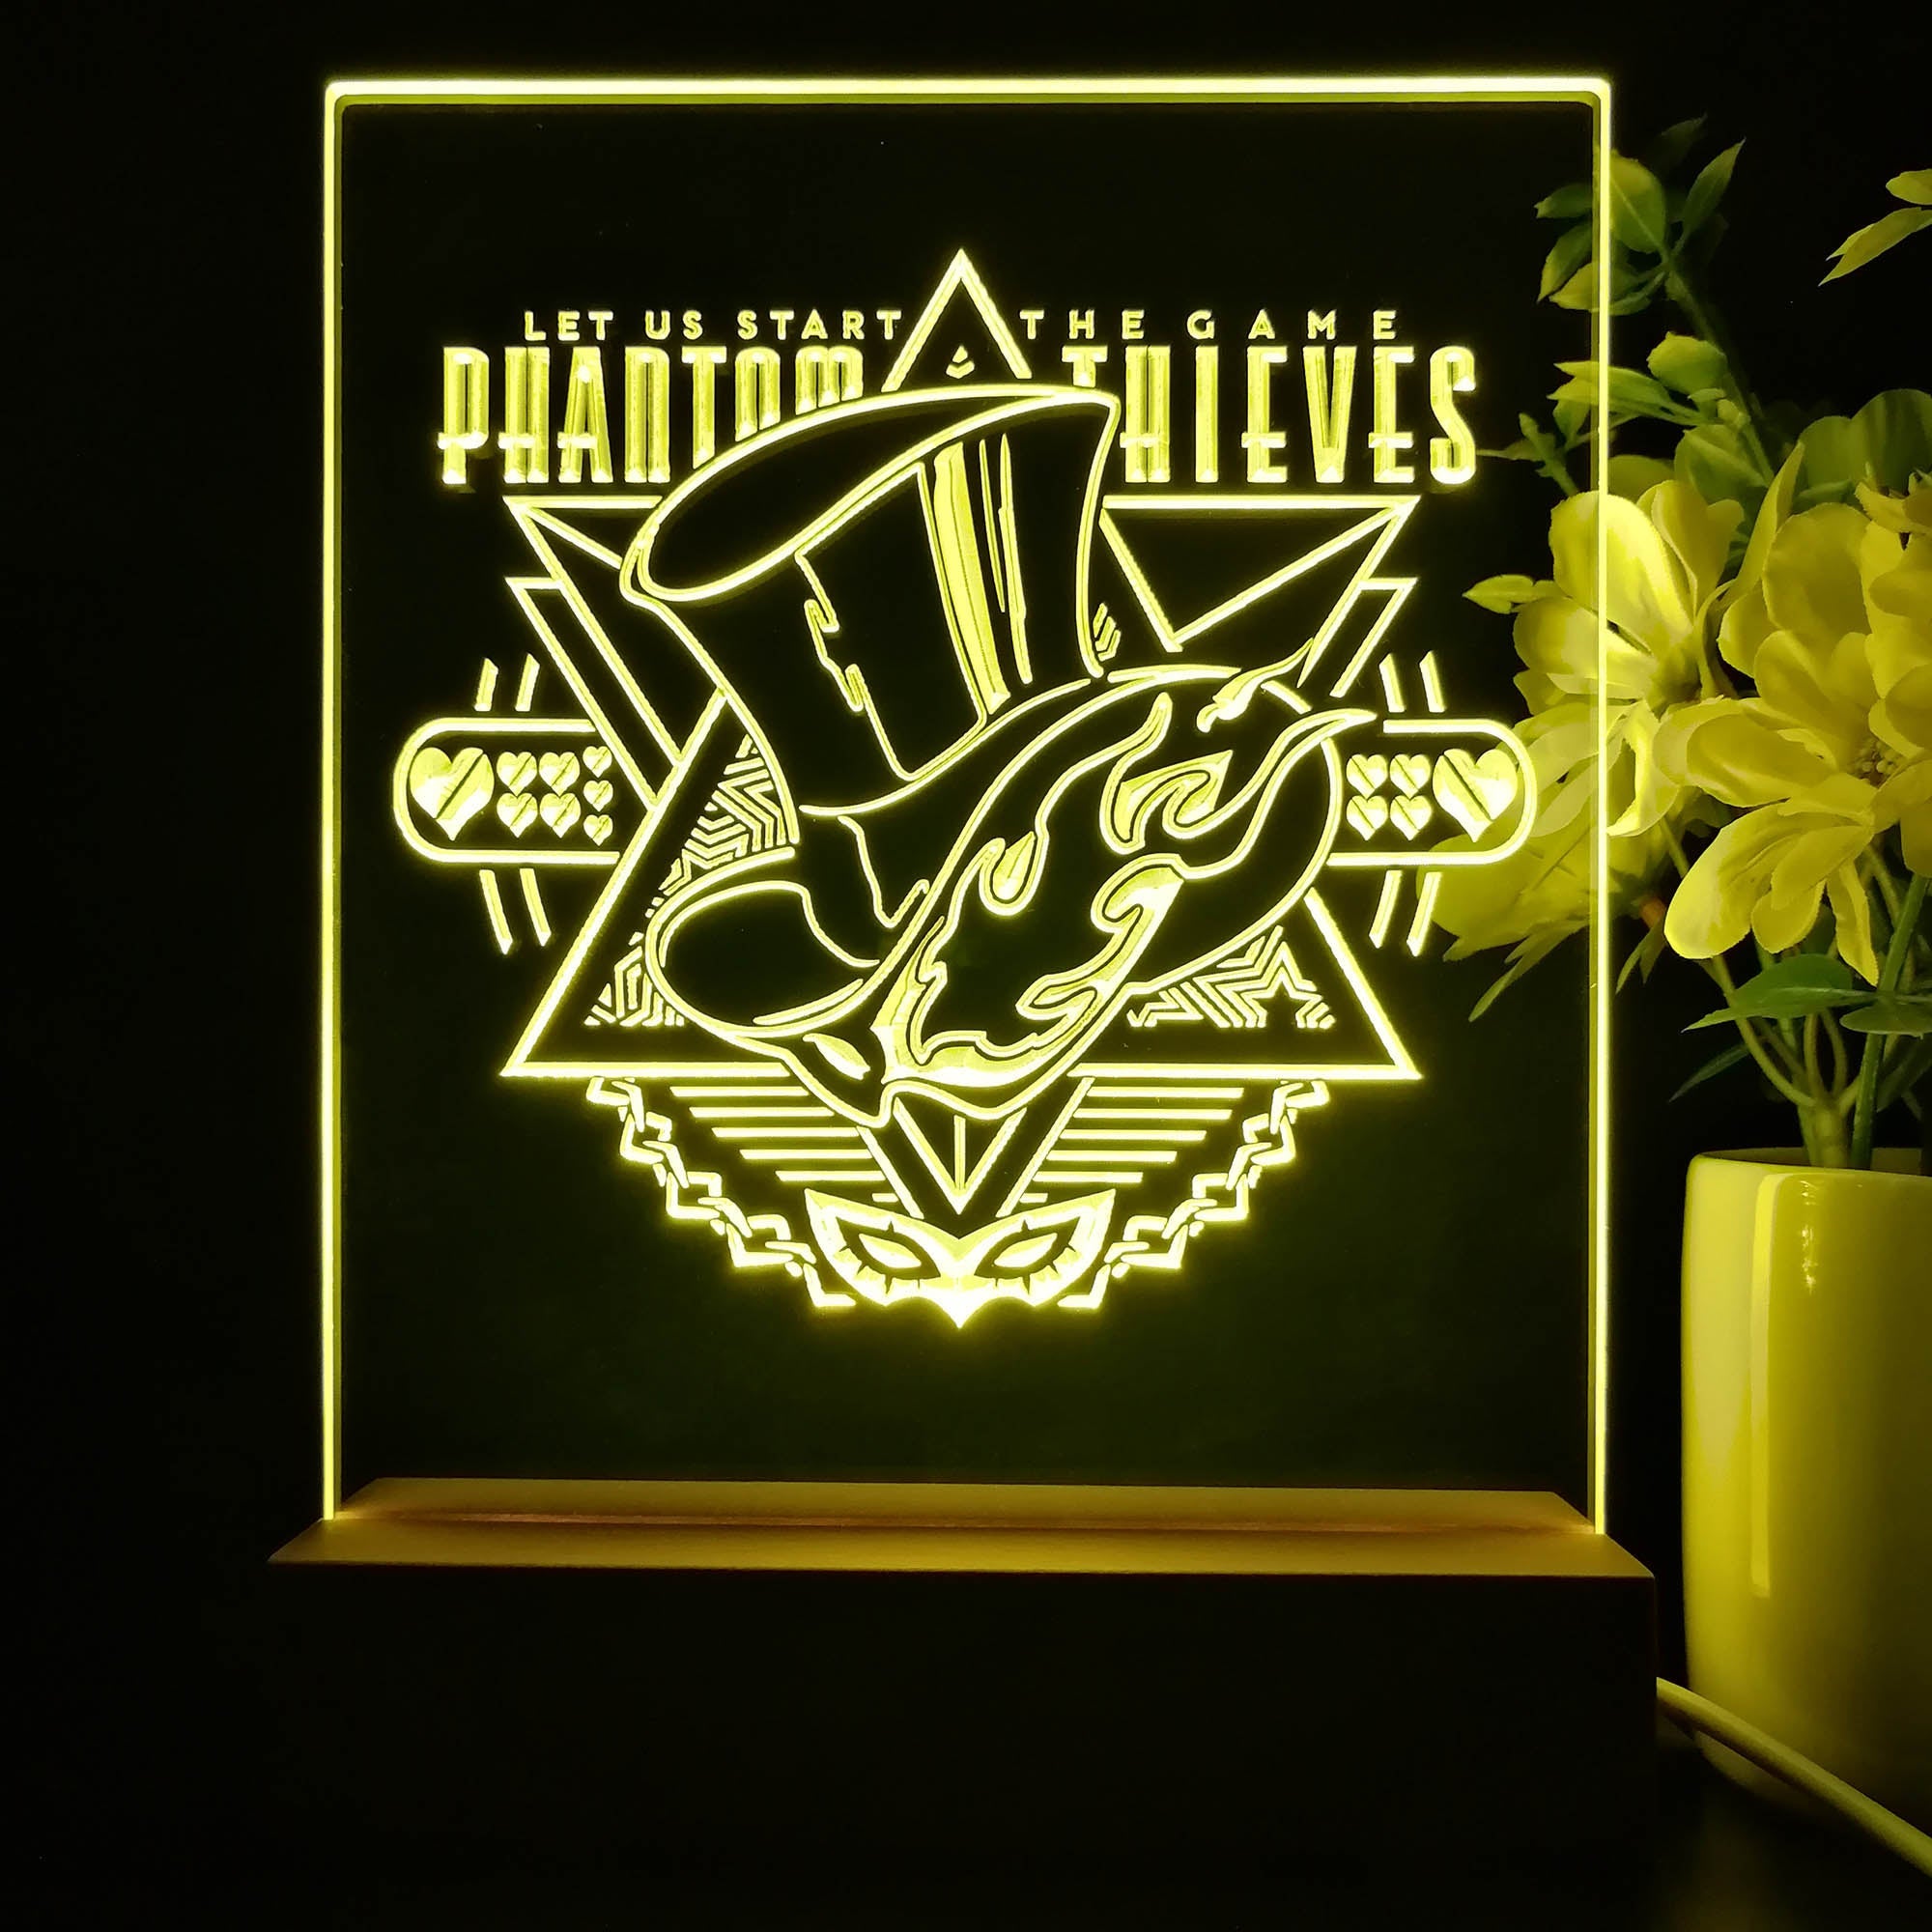 Persona 5 Royal Game Room LED Sign Lamp Display